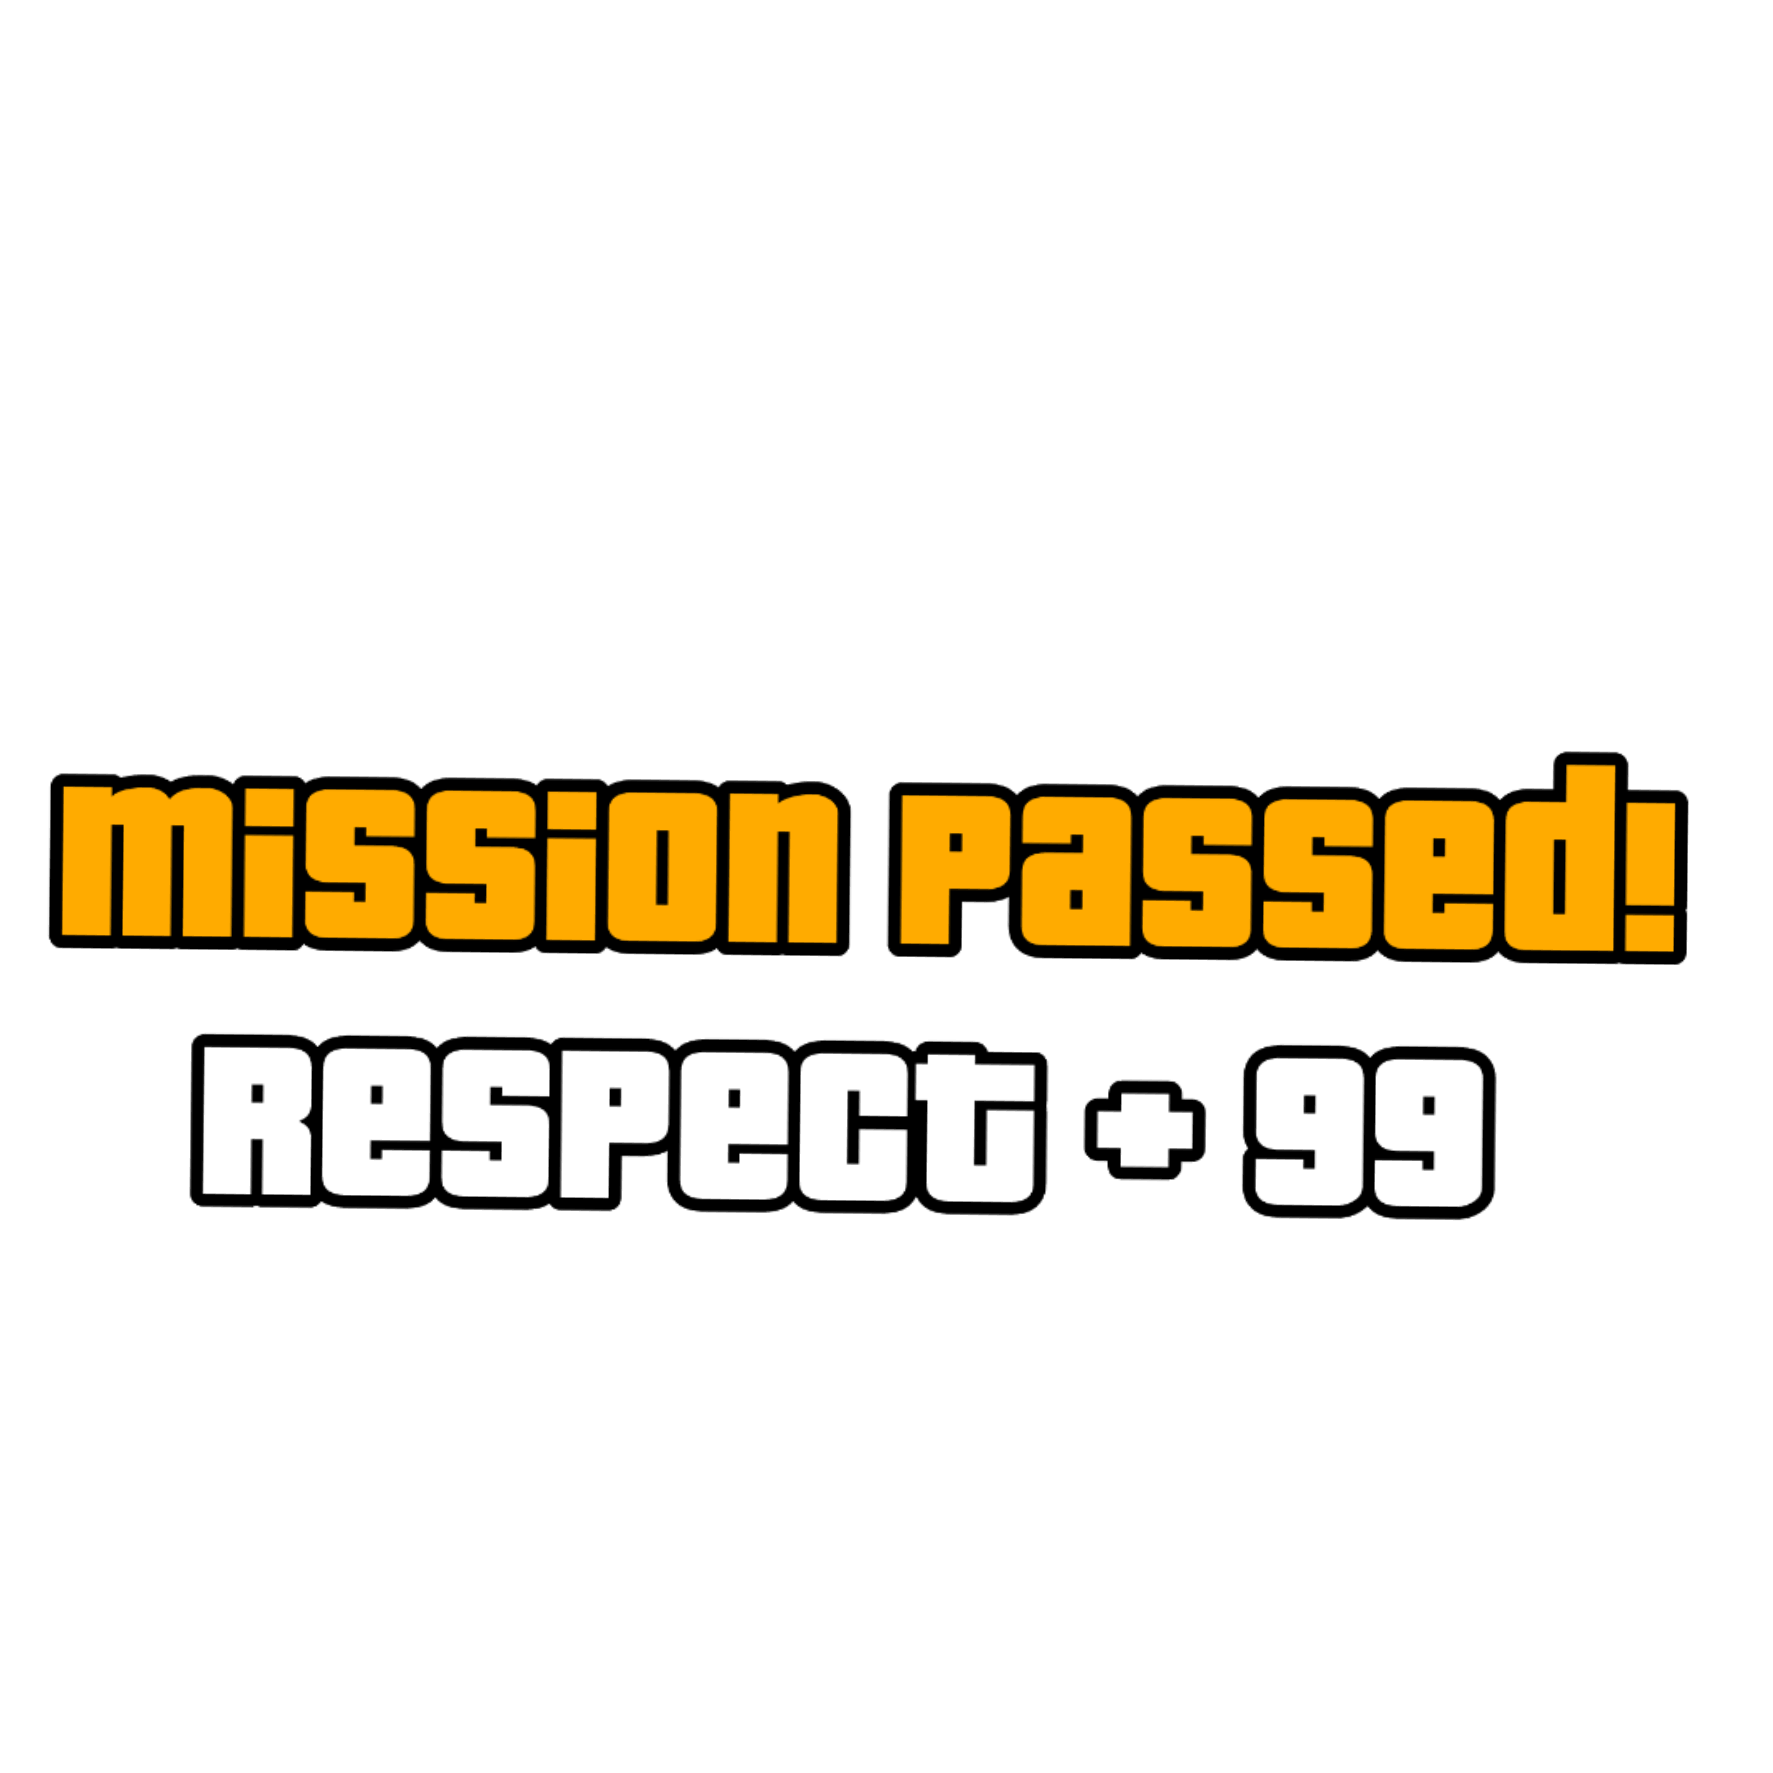 Звук гта миссия. ГТА Сан андреас Mission complete. GTA Mission Passed. Mission complete respect+ GTA. Mission Passed без фона.